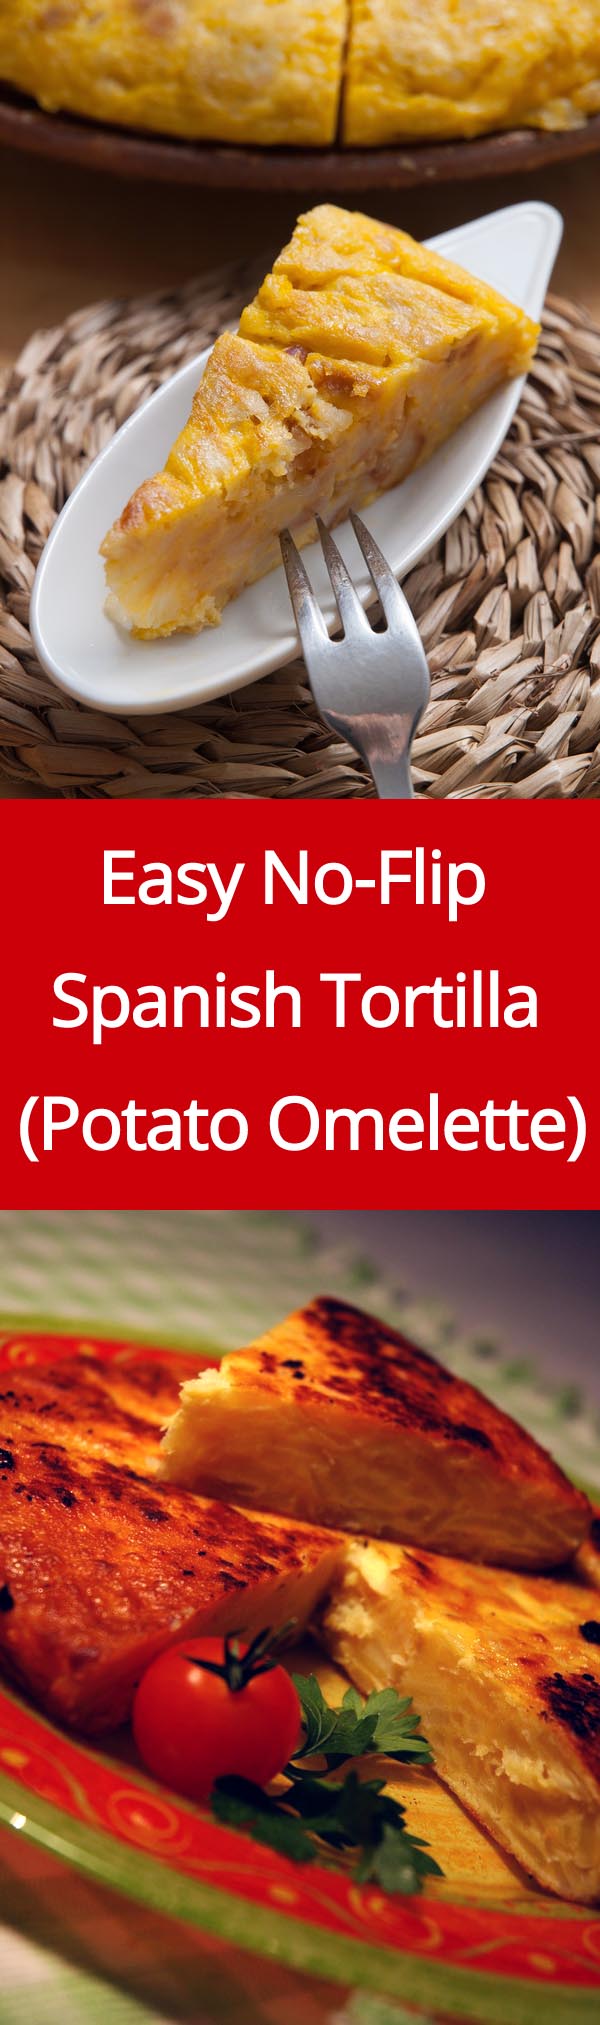 https://www.melaniecooks.com/wp-content/uploads/2016/06/spanish_tortilla_recipe2.jpg